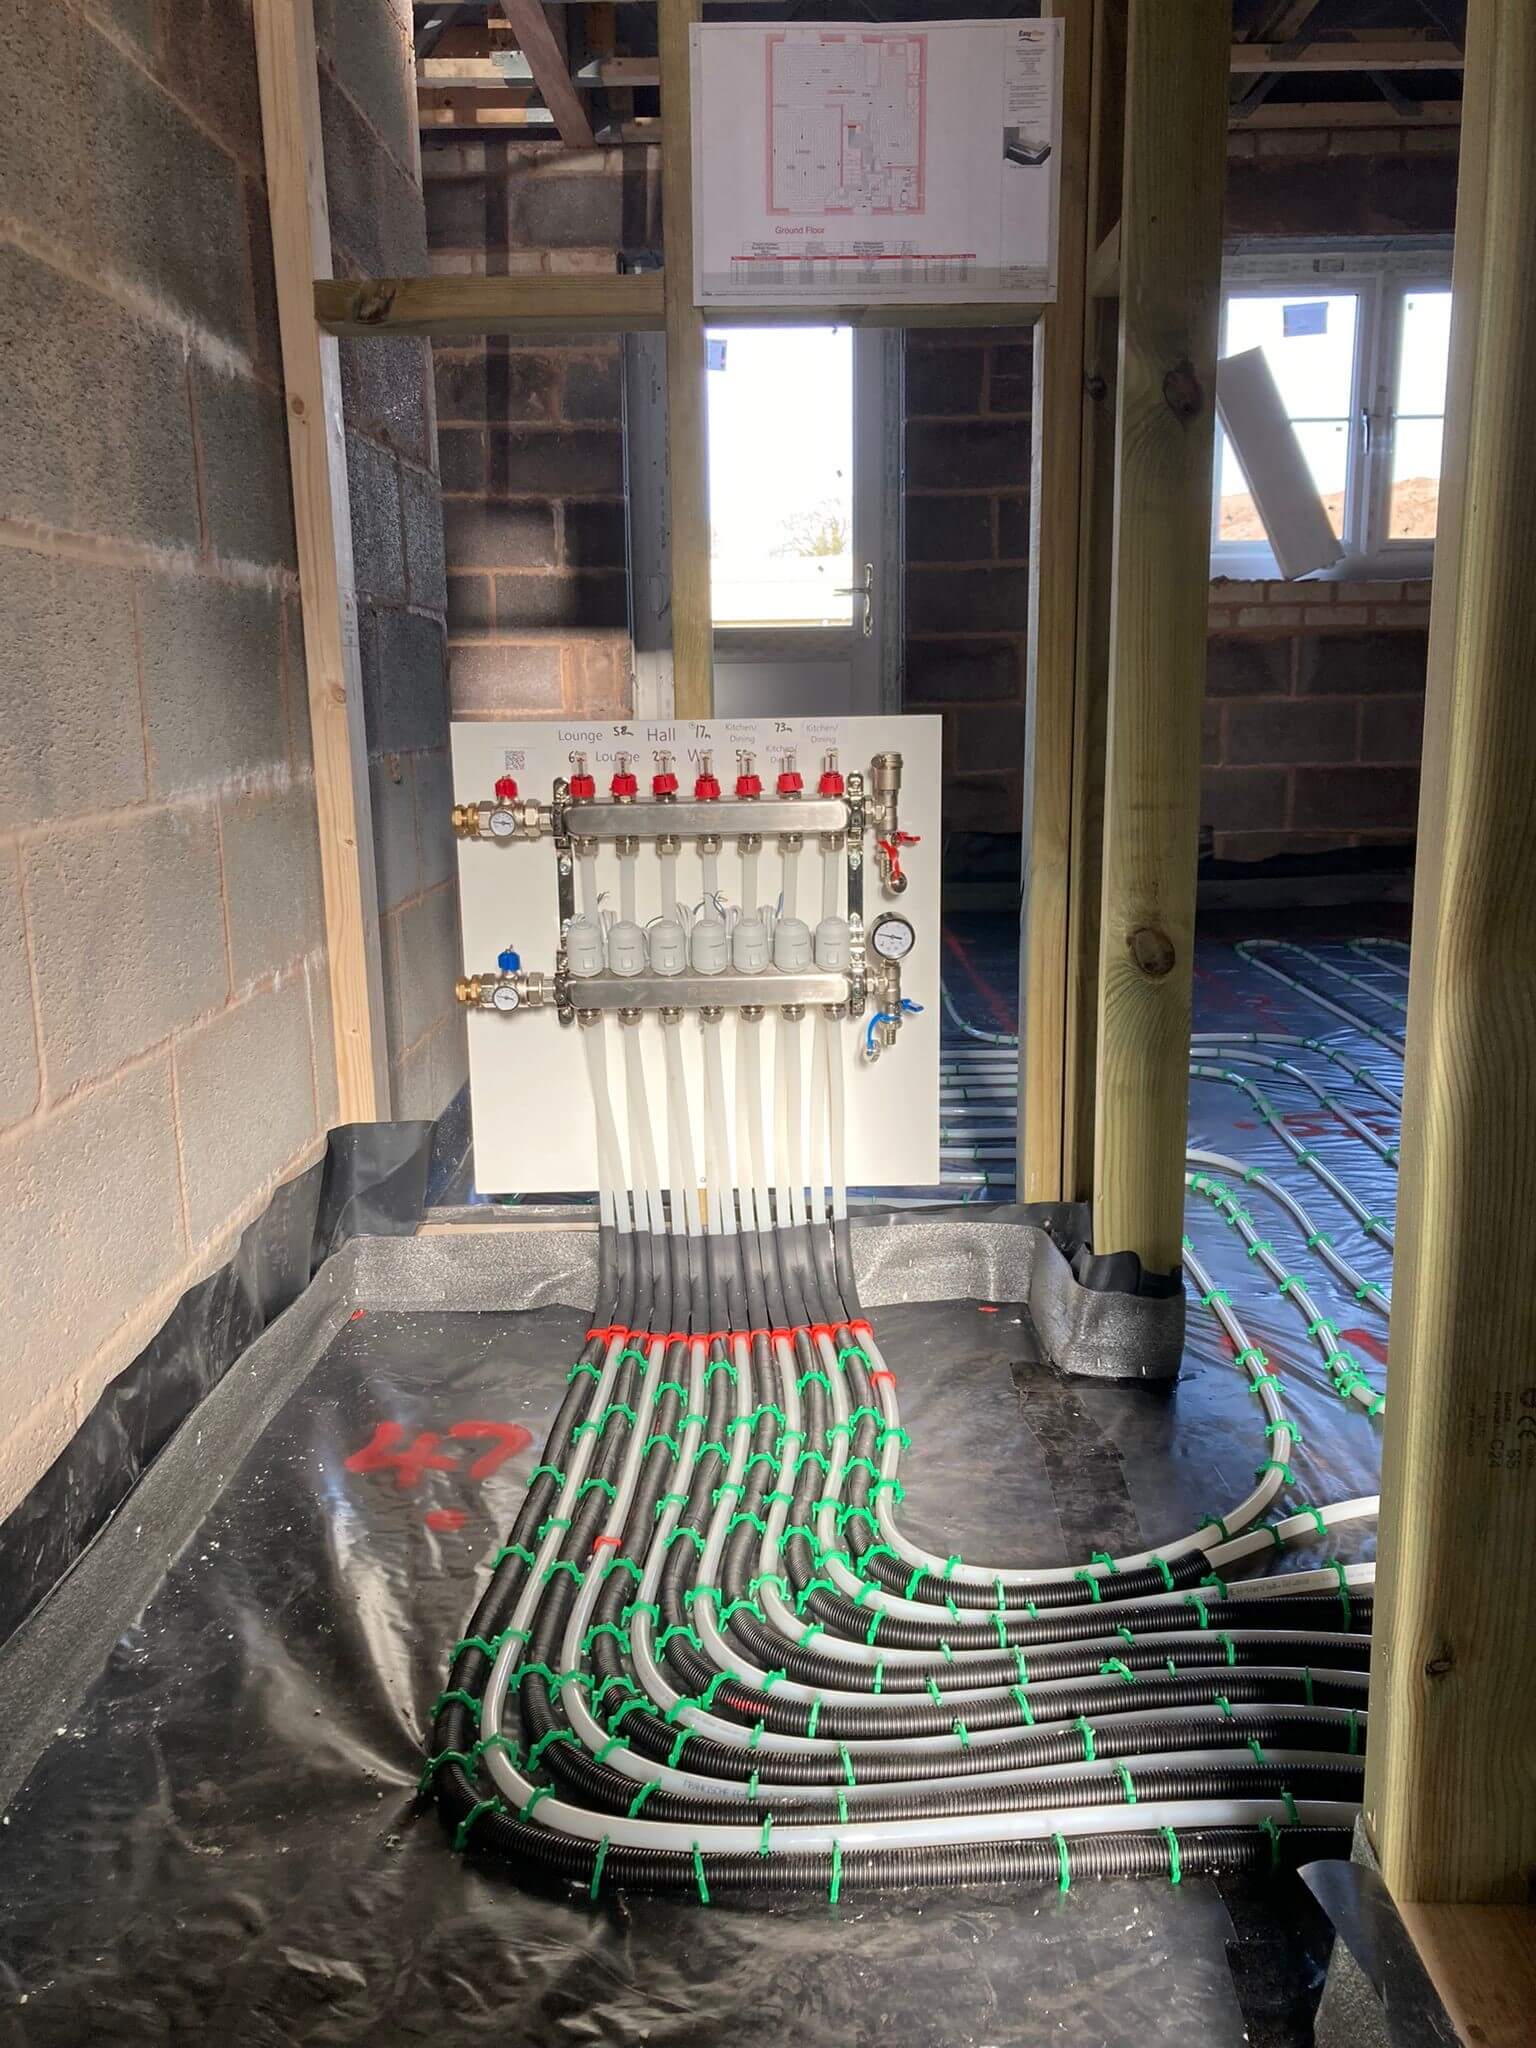 The heating manifold for an underfloor heating for tiled floors setup